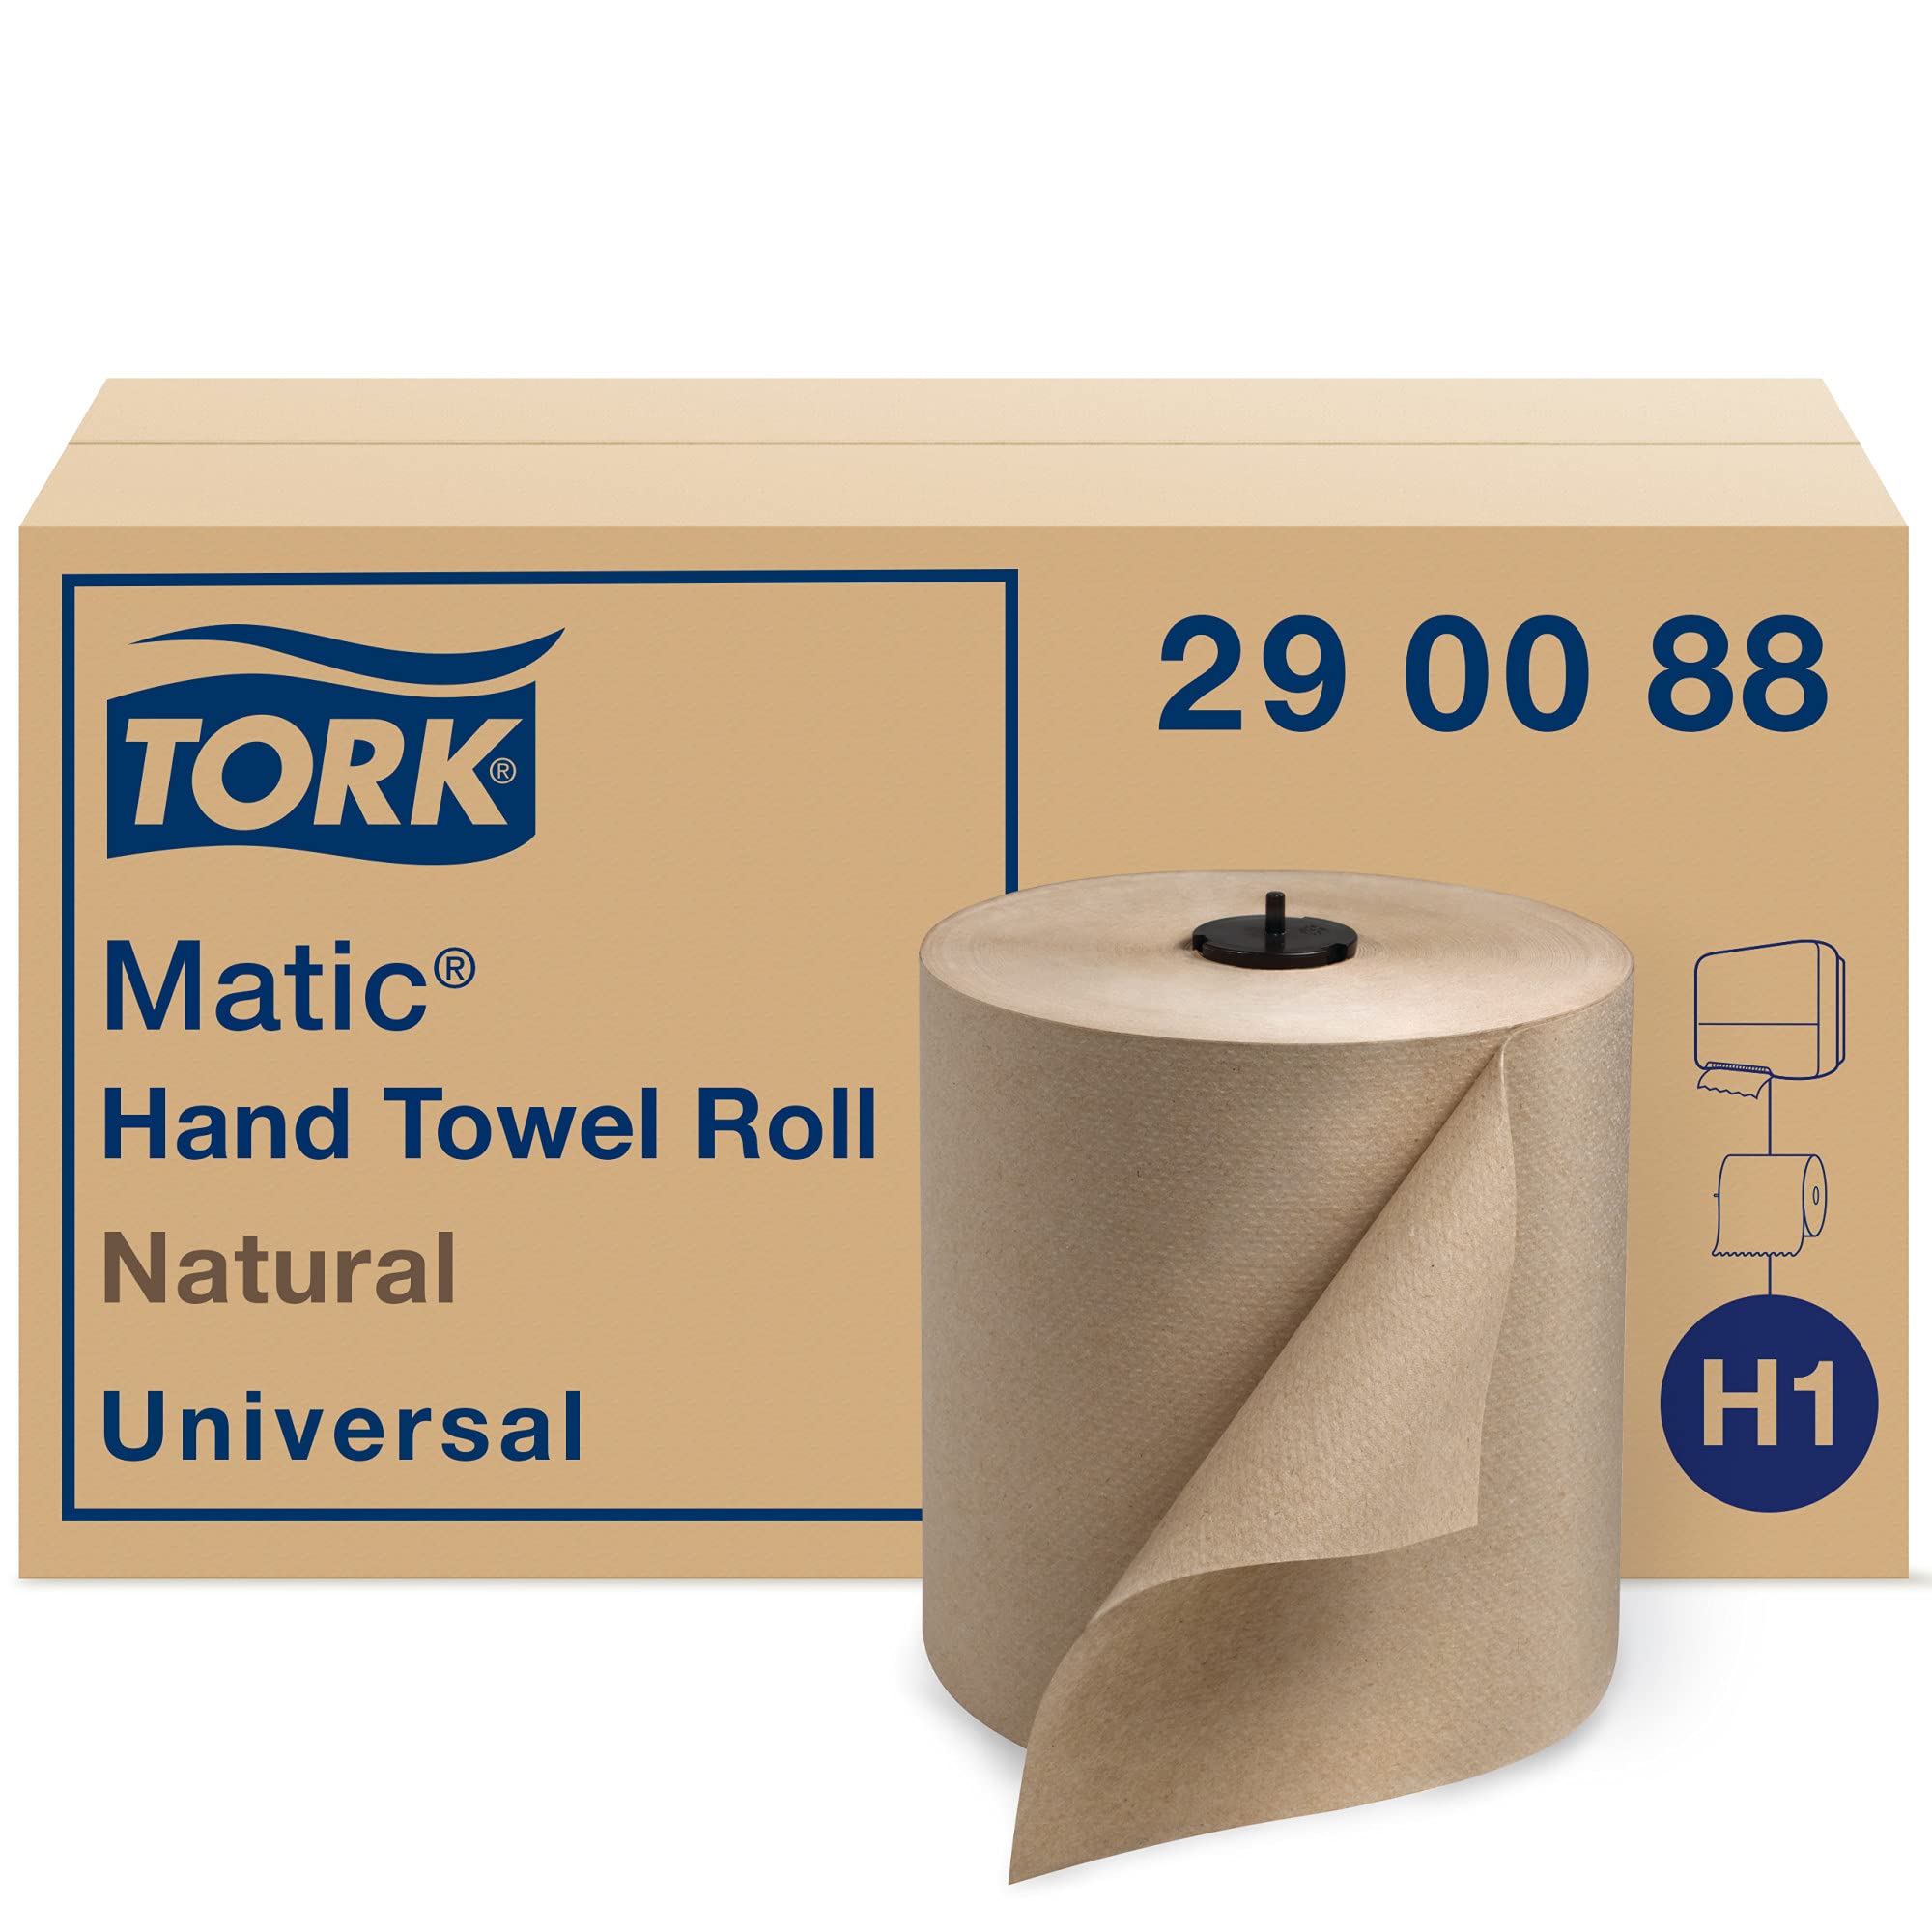 Tork Matic Advanced ペーパータオルロール H1、ペーパーハンドタオル 290089、100% 再生繊維、高吸収性、大容量 1 層、ホワイト - 6 ロール x 700 フィート